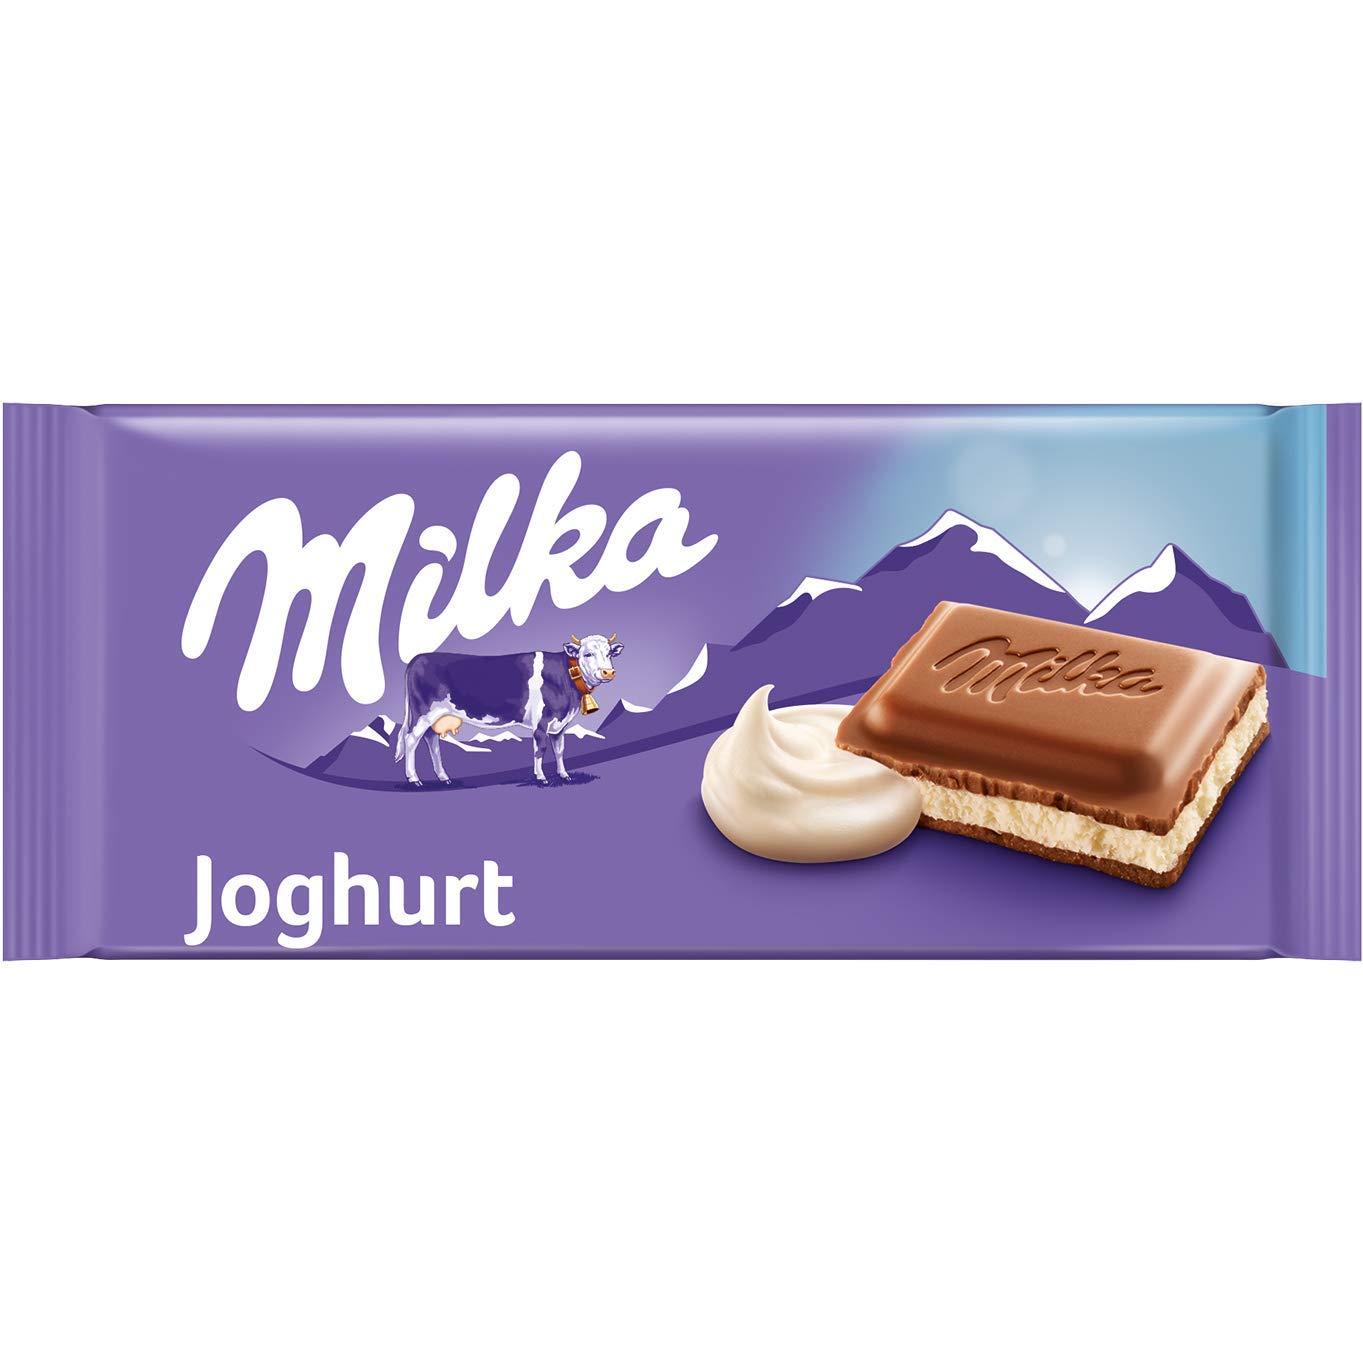 100g Tafel, Milka Joghurt, Schokoladentafel mit cremiger Joghurt-Füllung, noch schokoladiger 